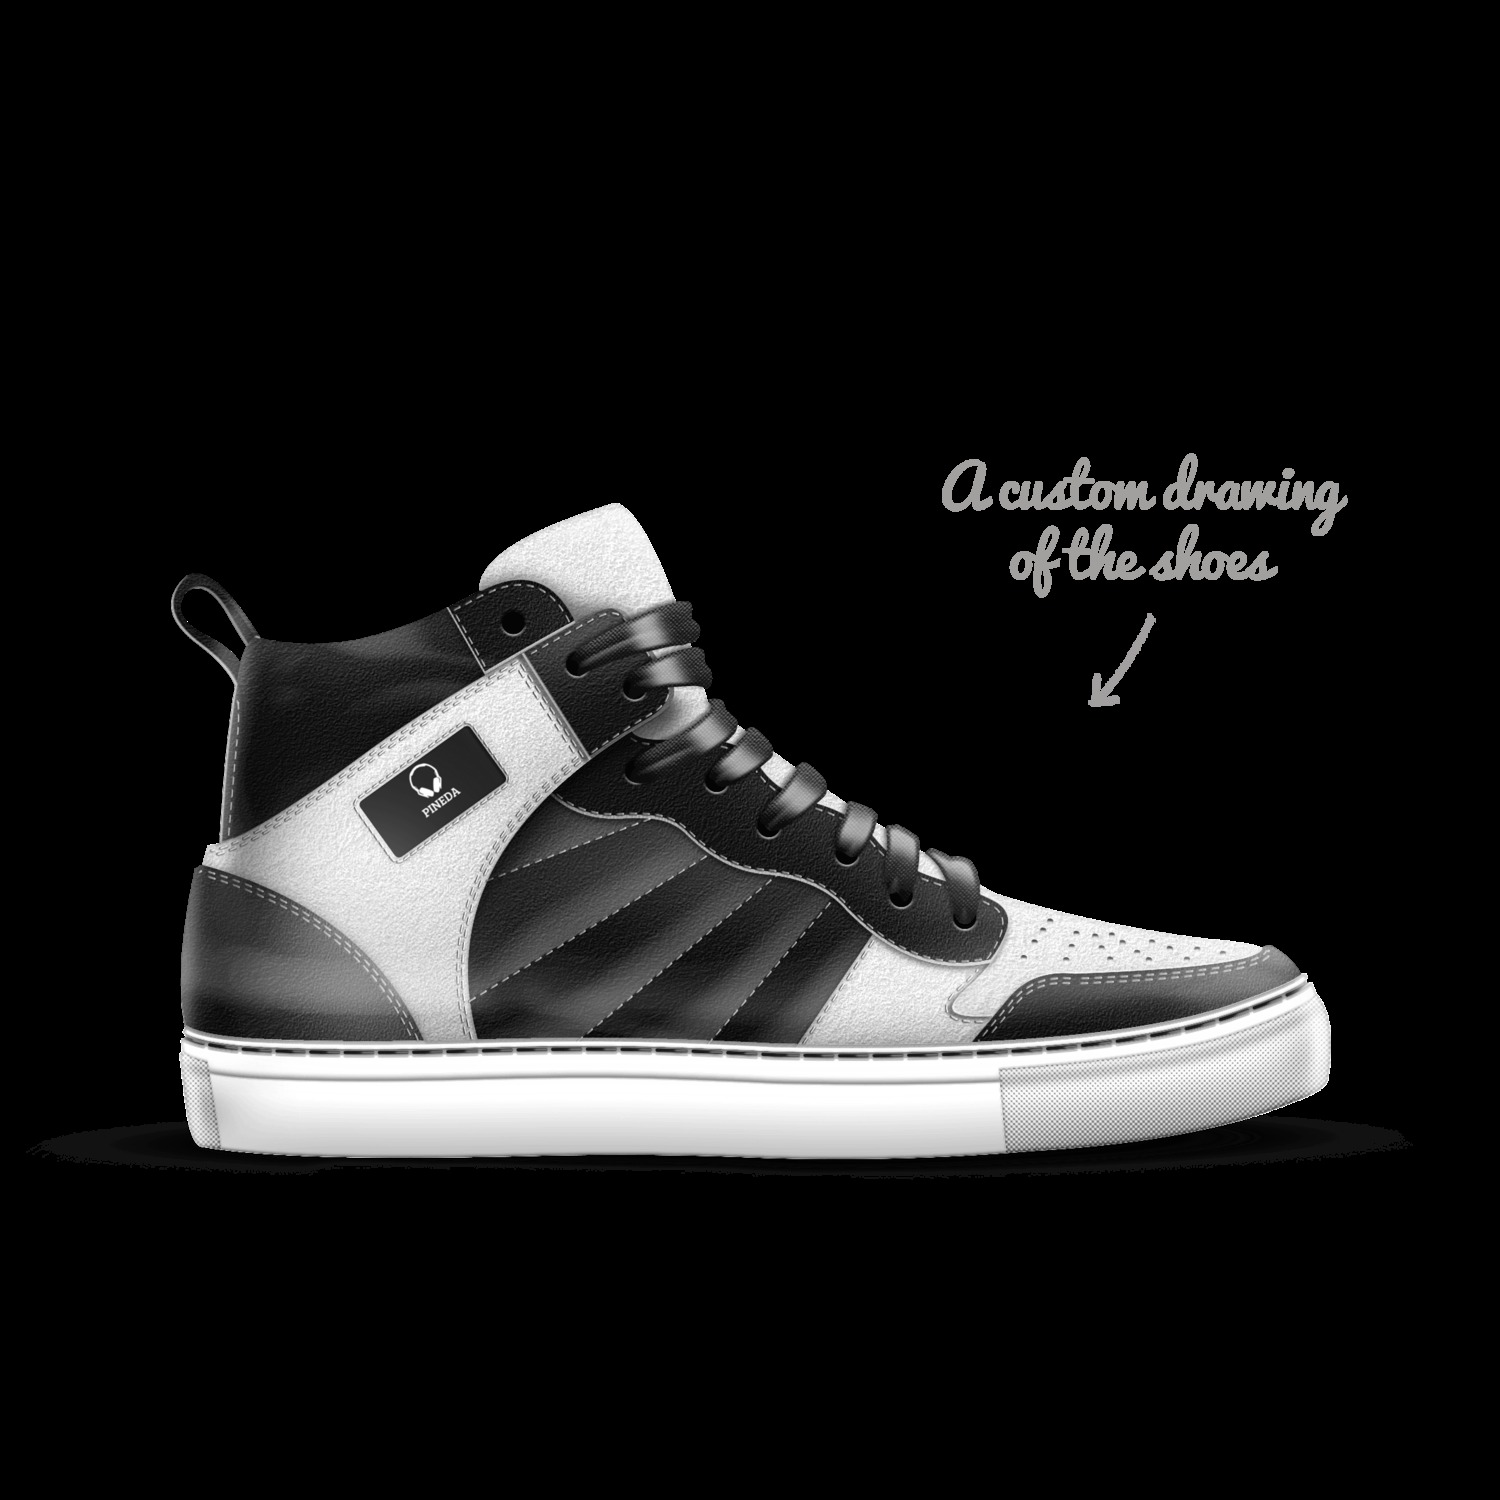 A Custom Shoe concept by Carlos Pineda